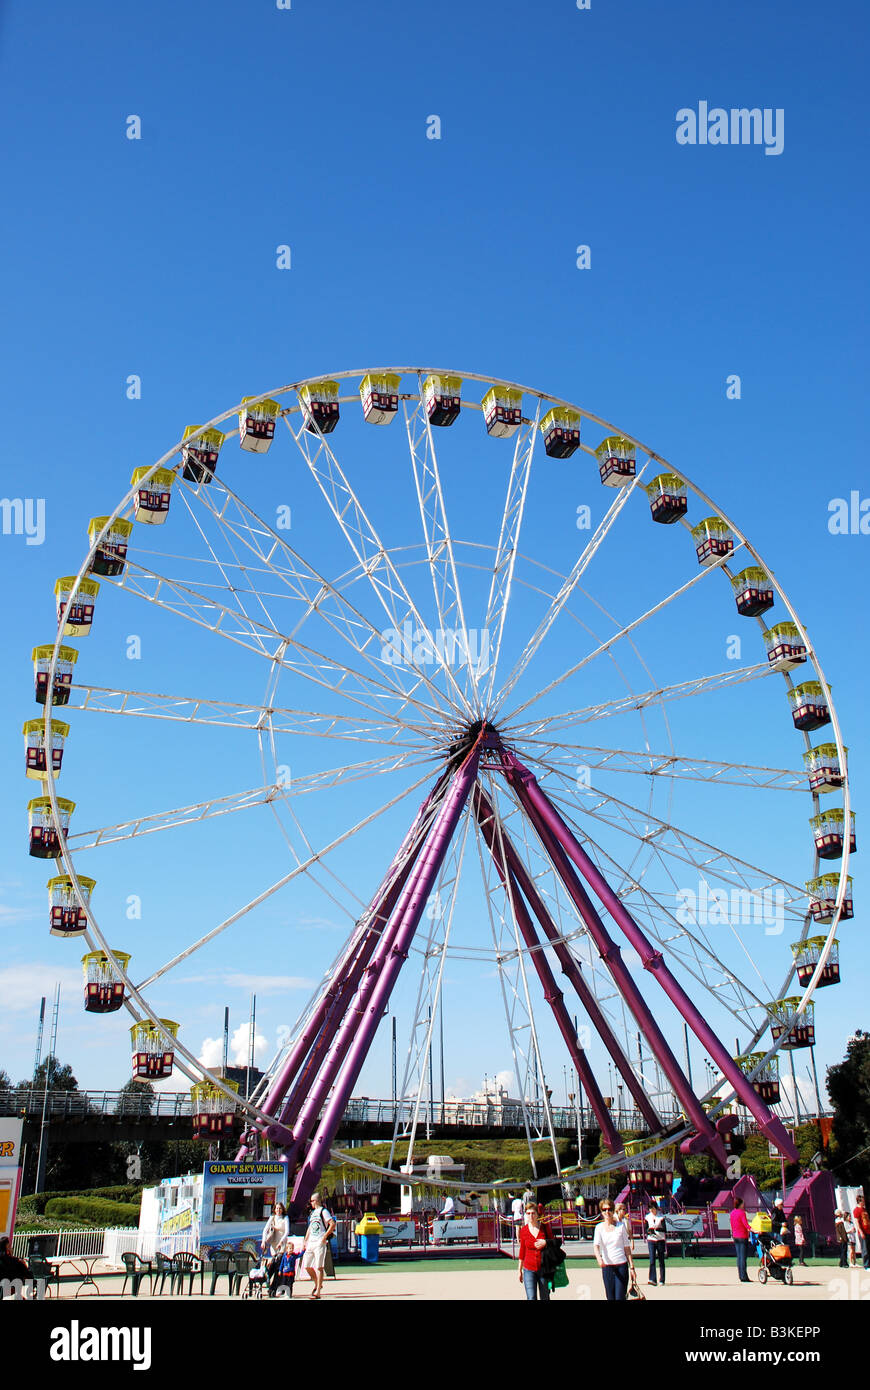 Ferris wheel on a sunny day Stock Photo